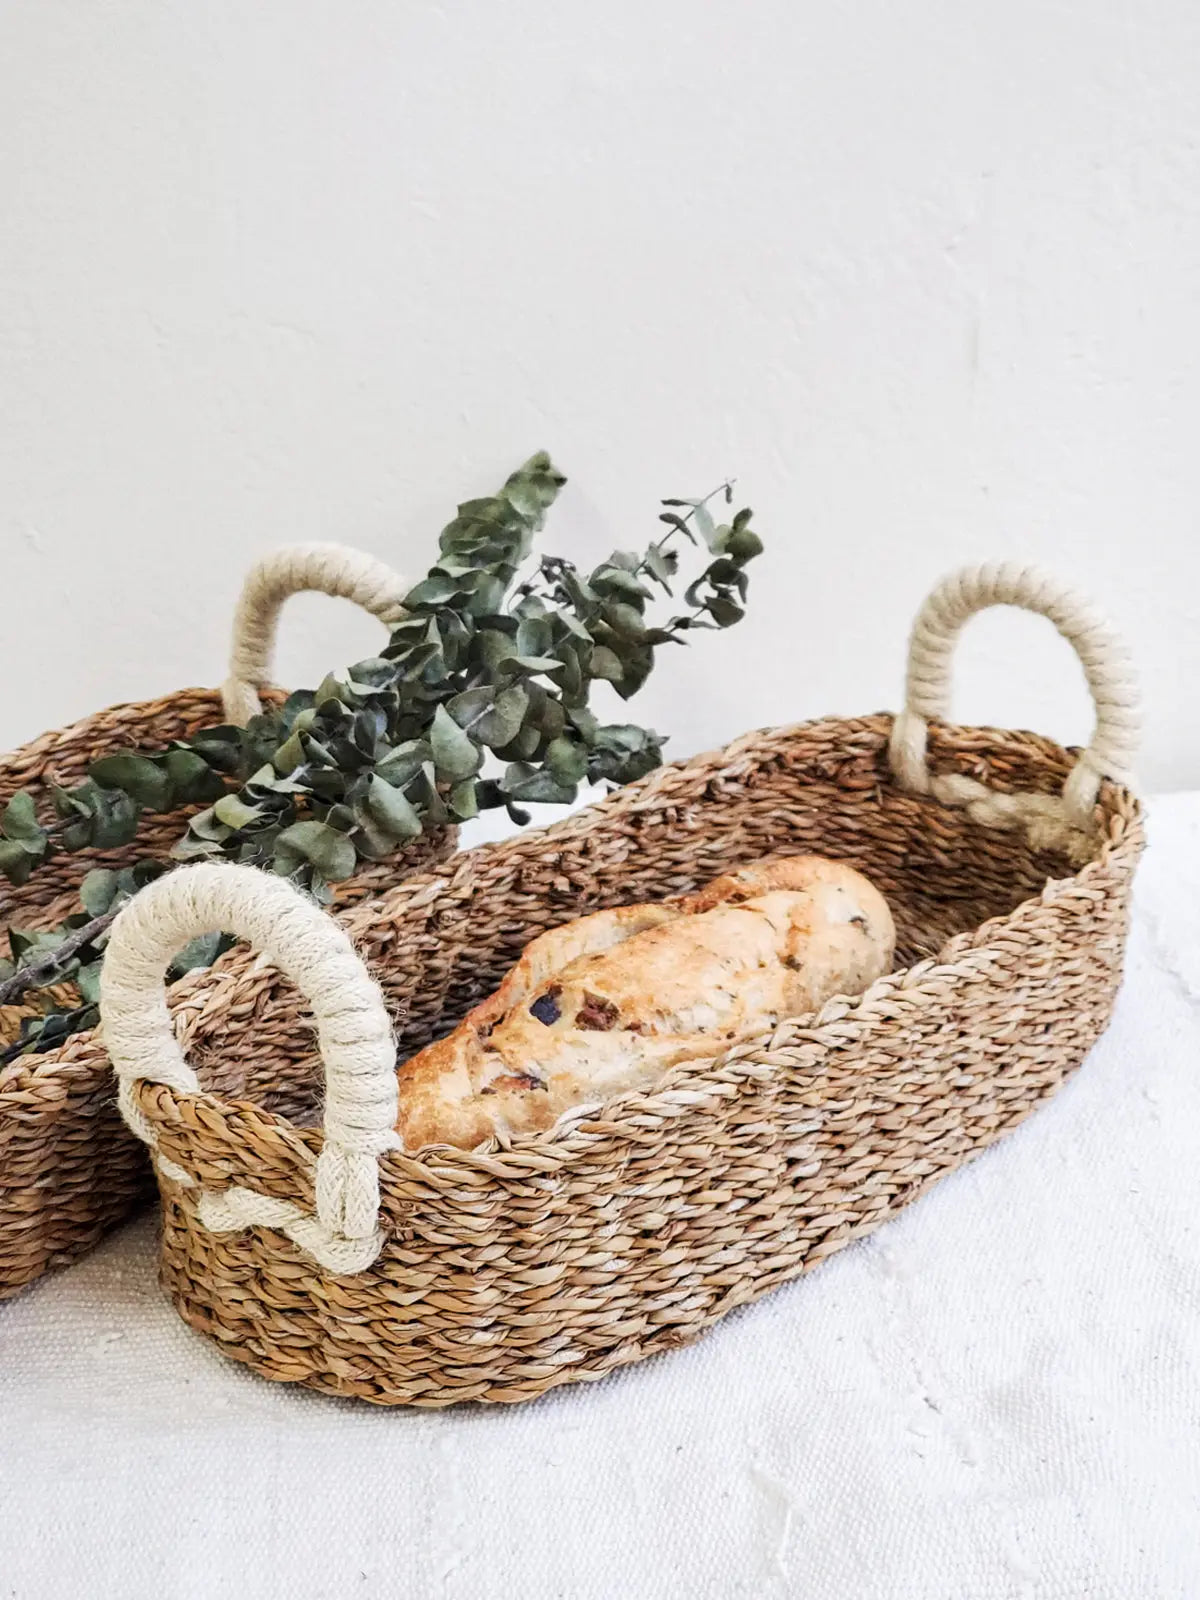 Savar Bread Basket with White Handle KORISSA